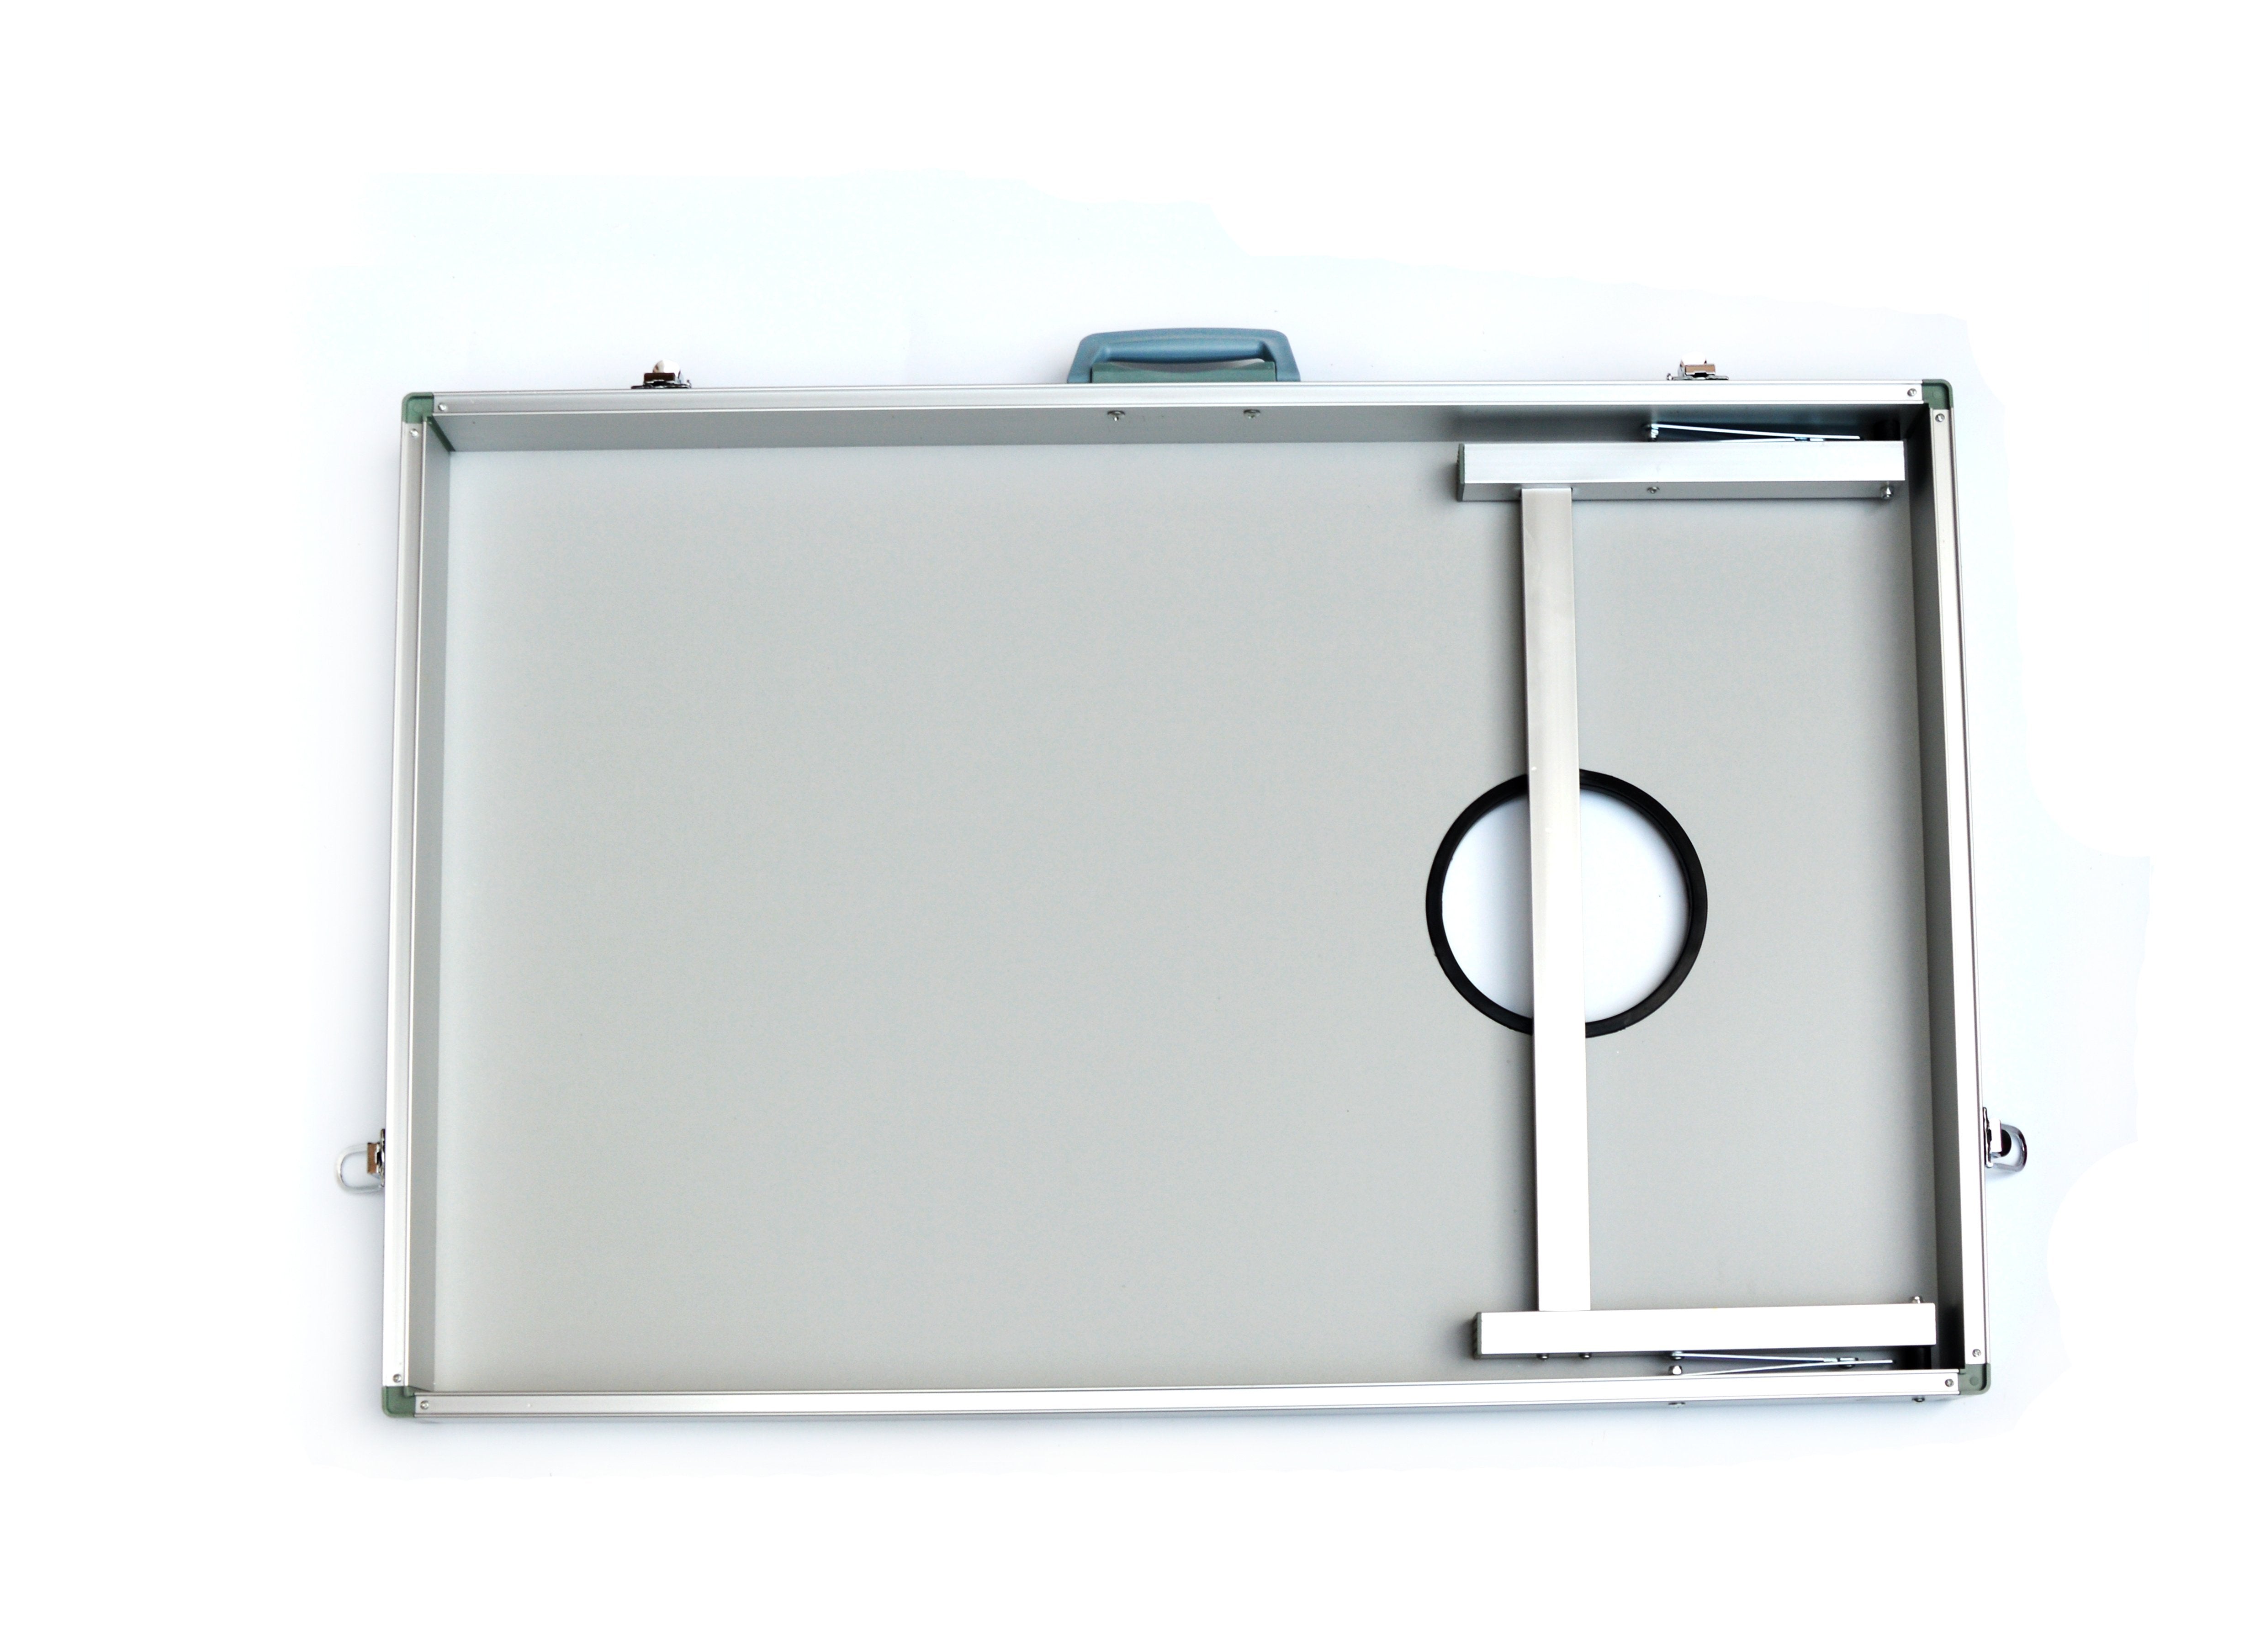 Games Bean Bag Toss Cornhole Game Set Aluminium Frame Portable Design